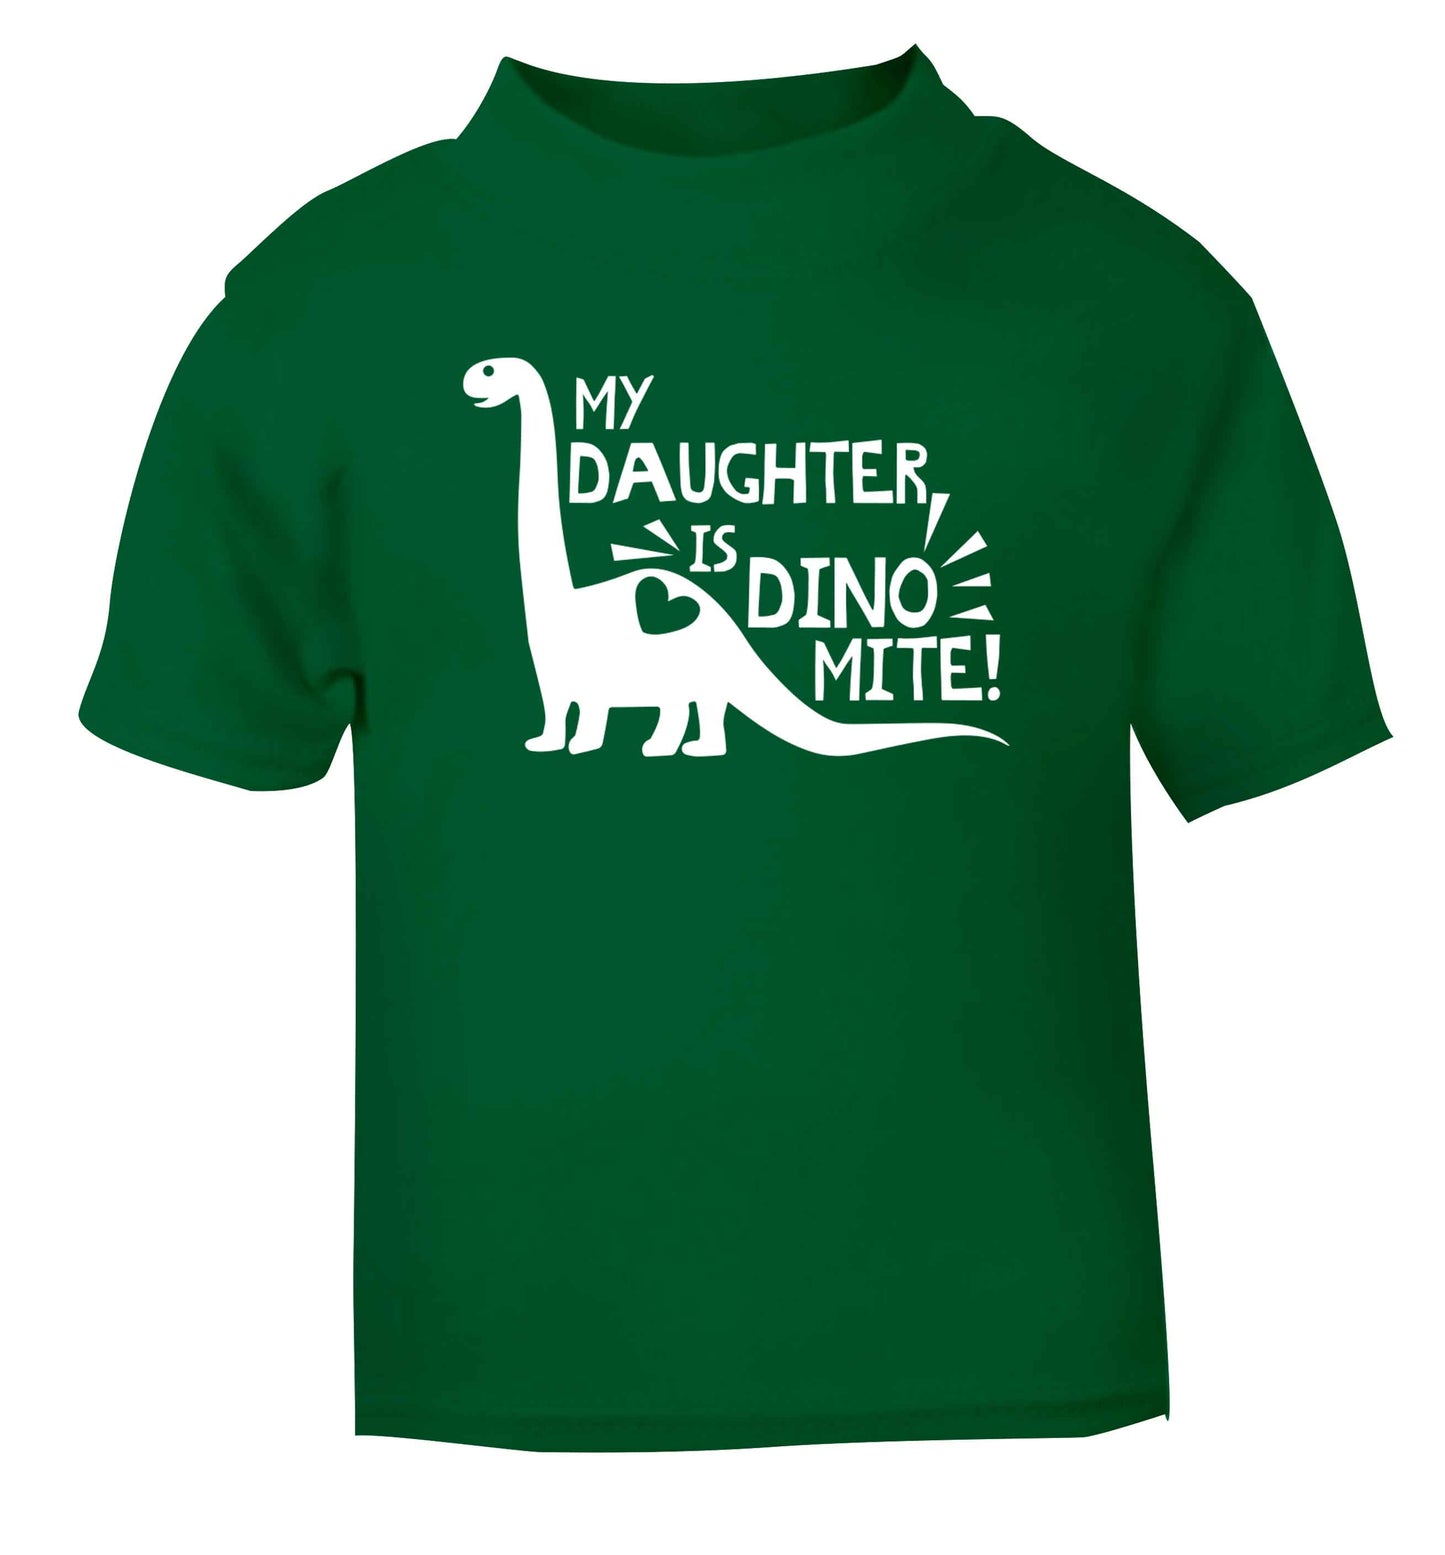 My daughter is dinomite! green Baby Toddler Tshirt 2 Years